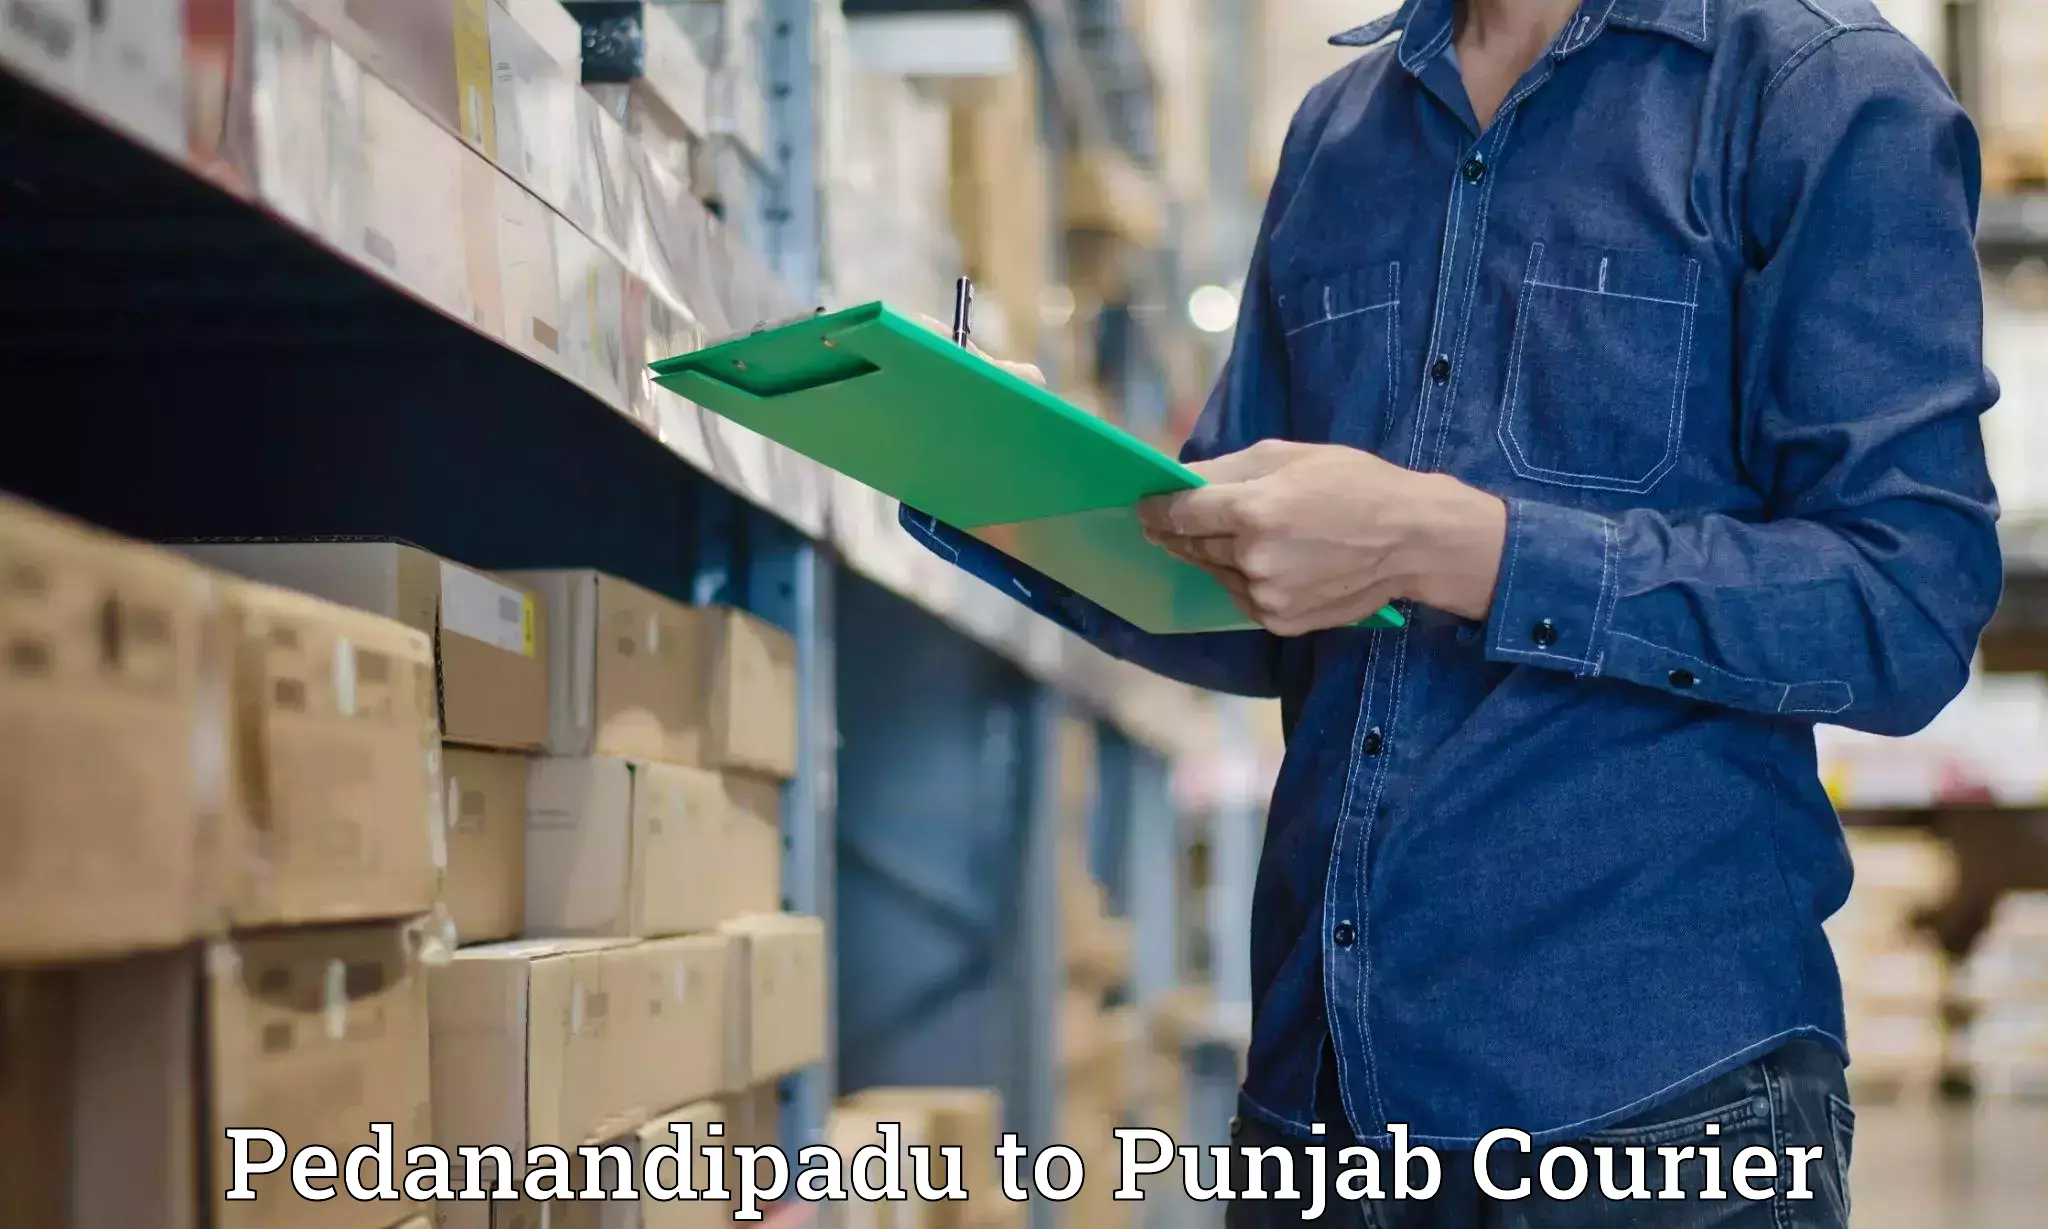 Efficient logistics management Pedanandipadu to Samana